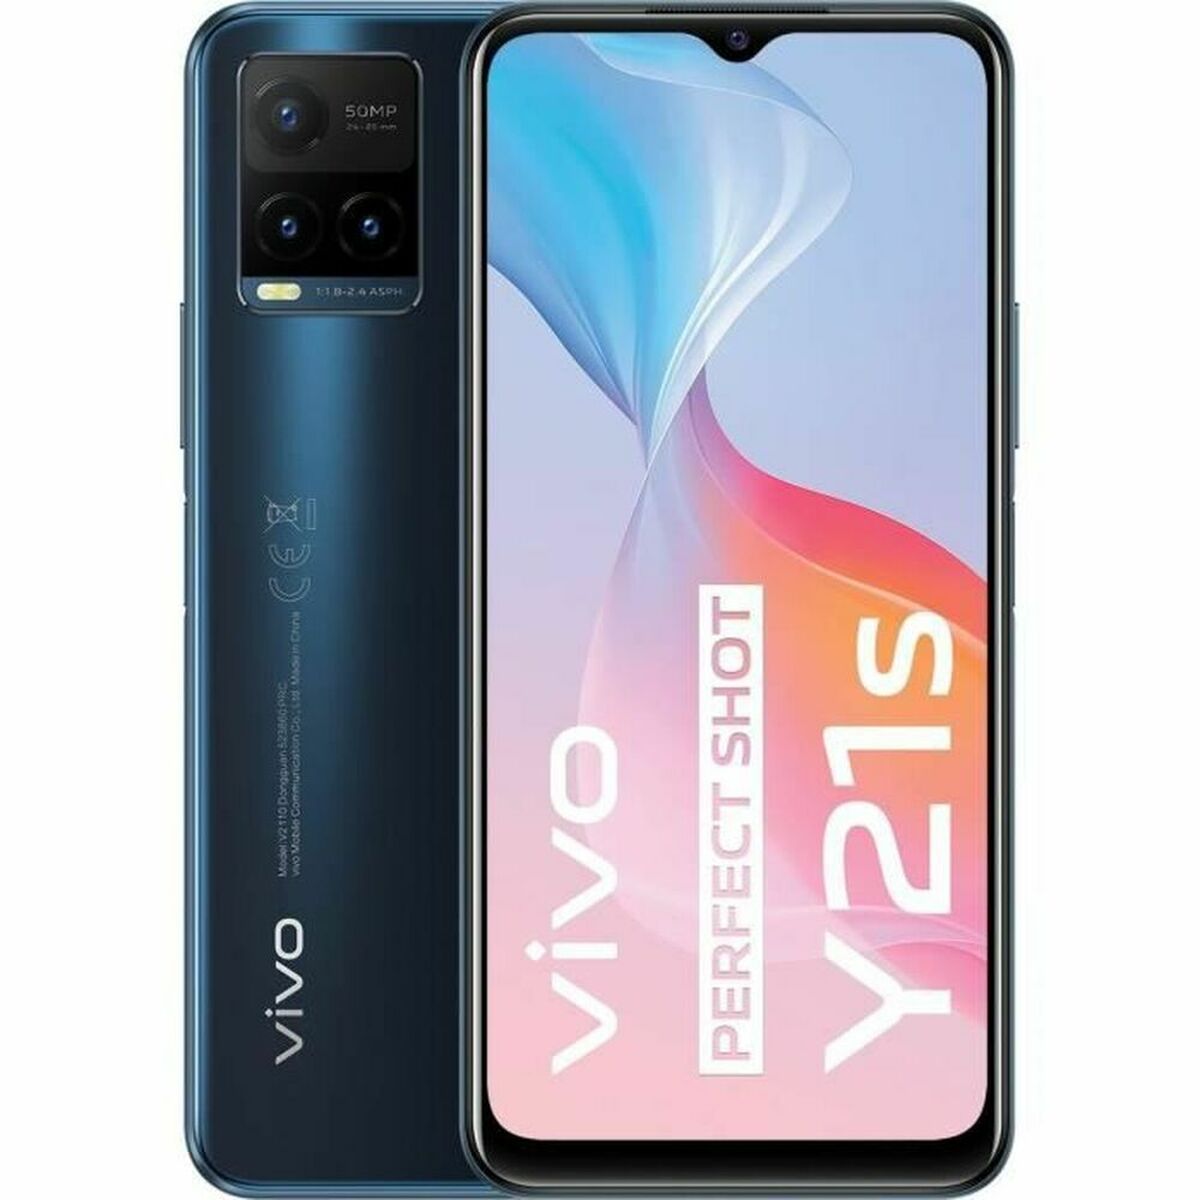 Smartphone Vivo Y21s Octa Core 4 GB RAM - CA International  